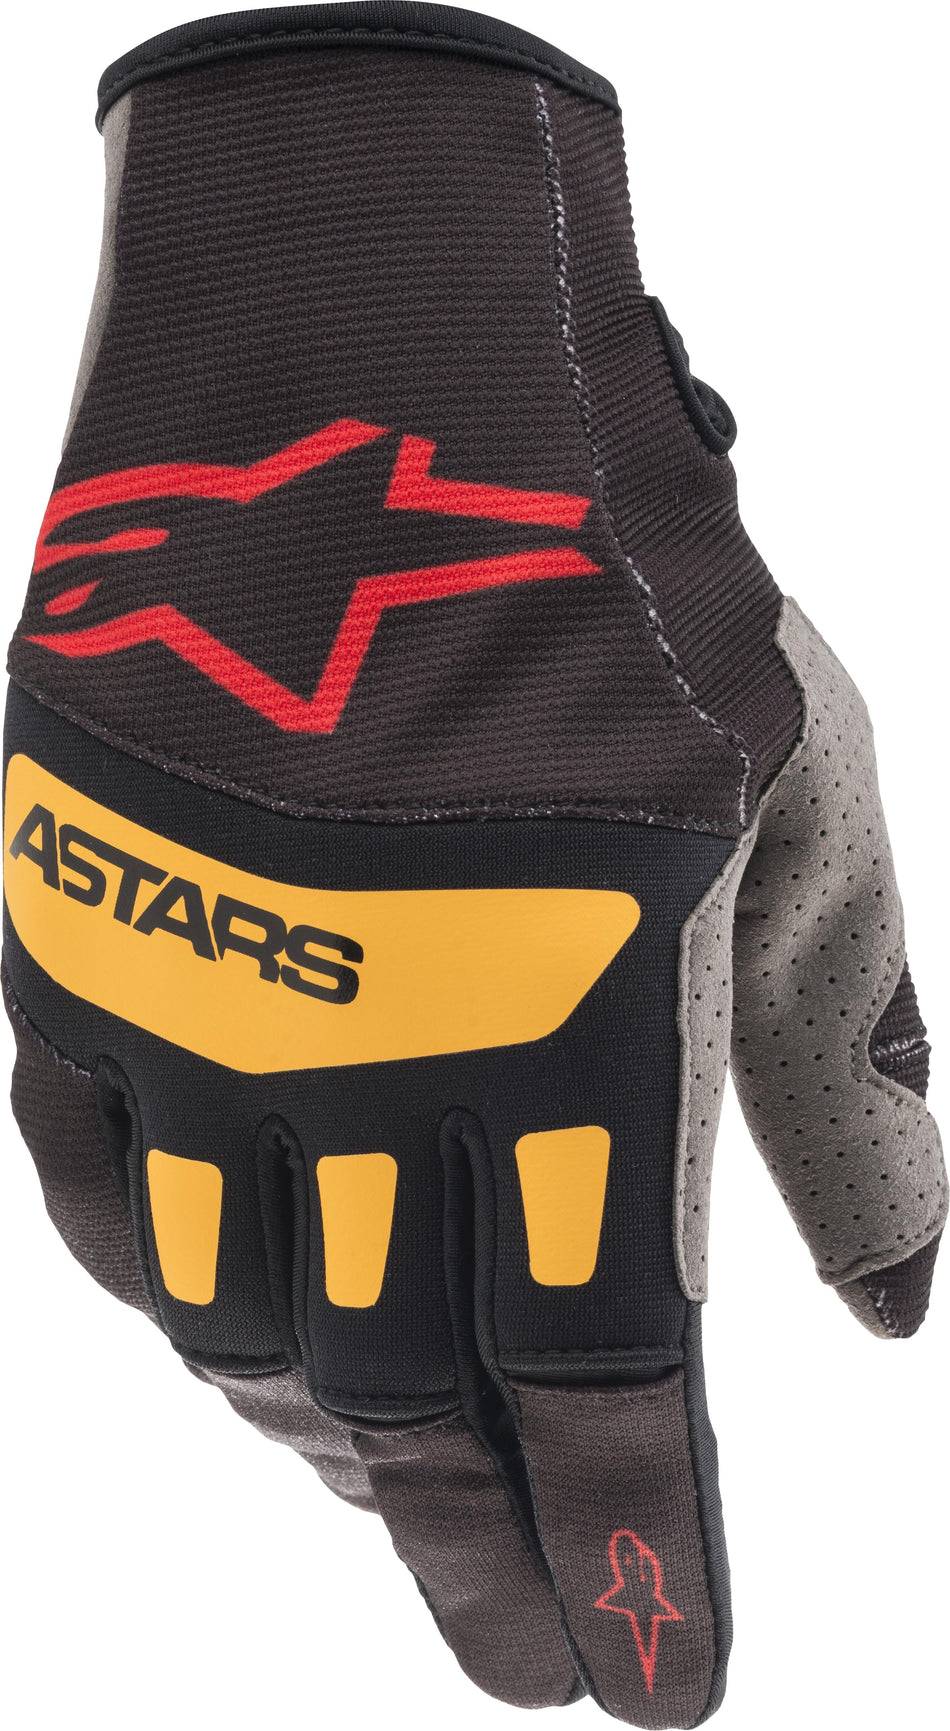 ALPINESTARS Techstar Gloves Black/Bright Red/Orange Md 3561021-1344-M